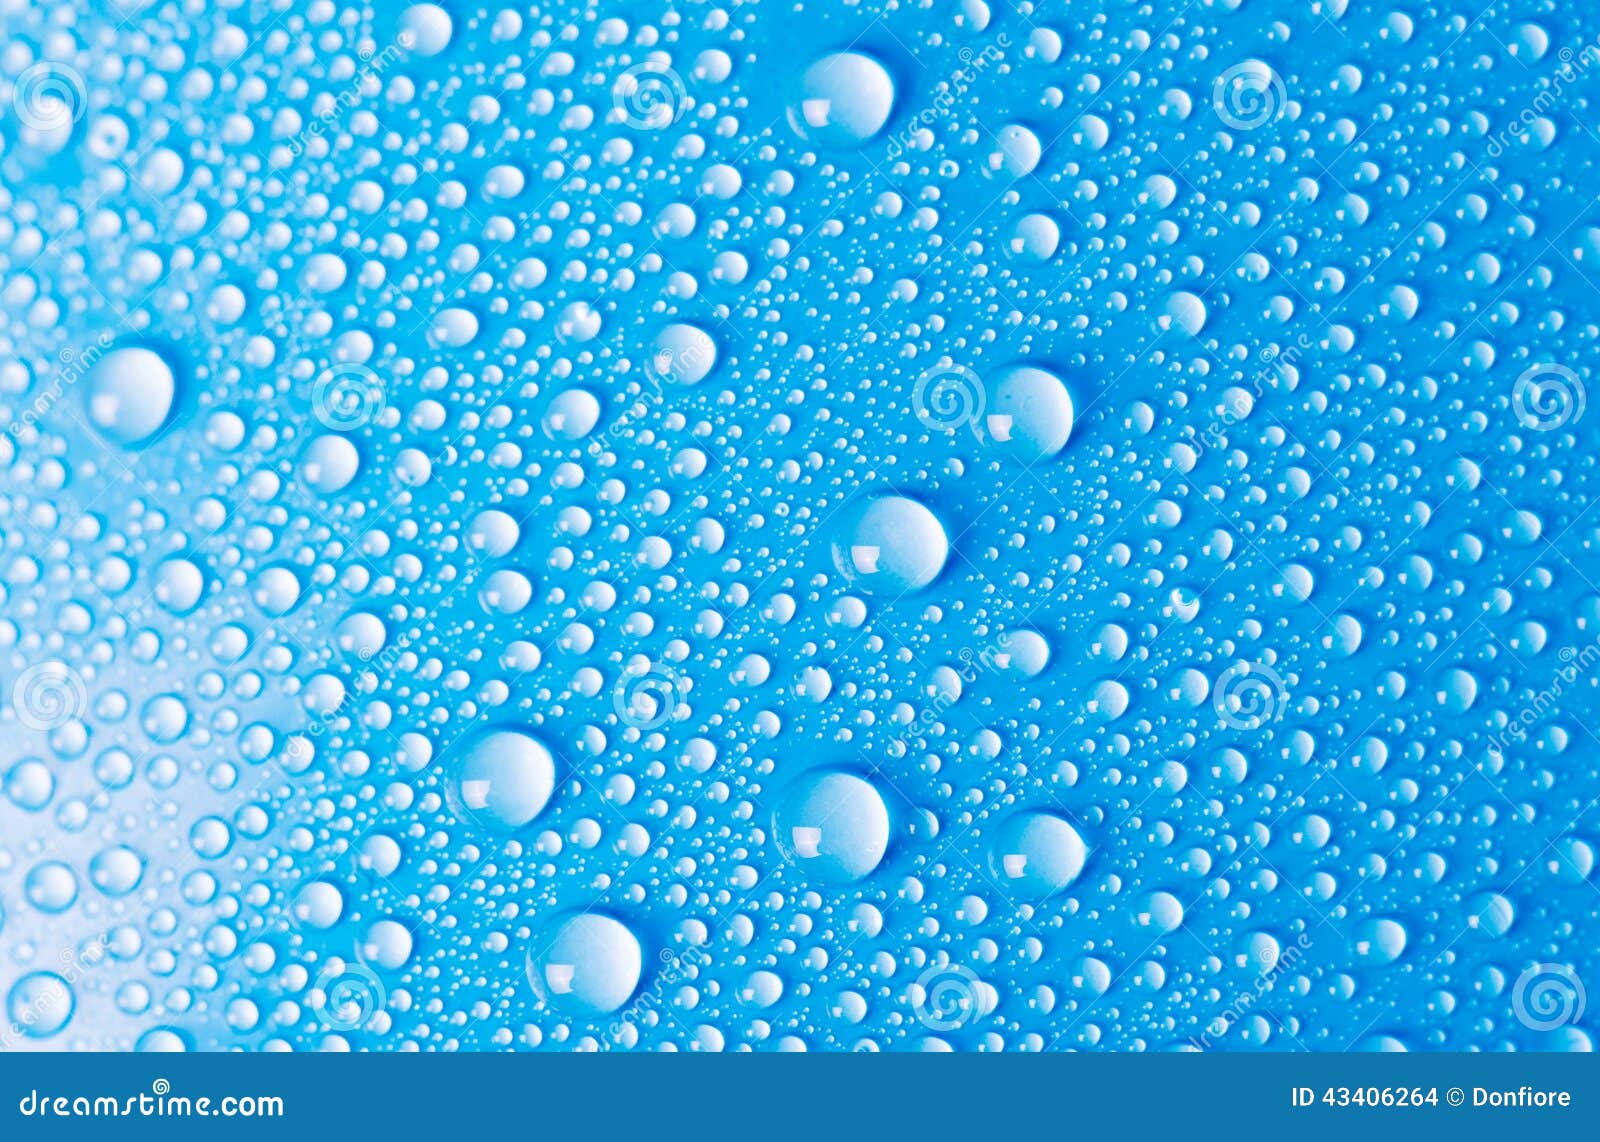 Blue Water Splash Background Download Free  Banner Background Image on  Lovepik  401516816